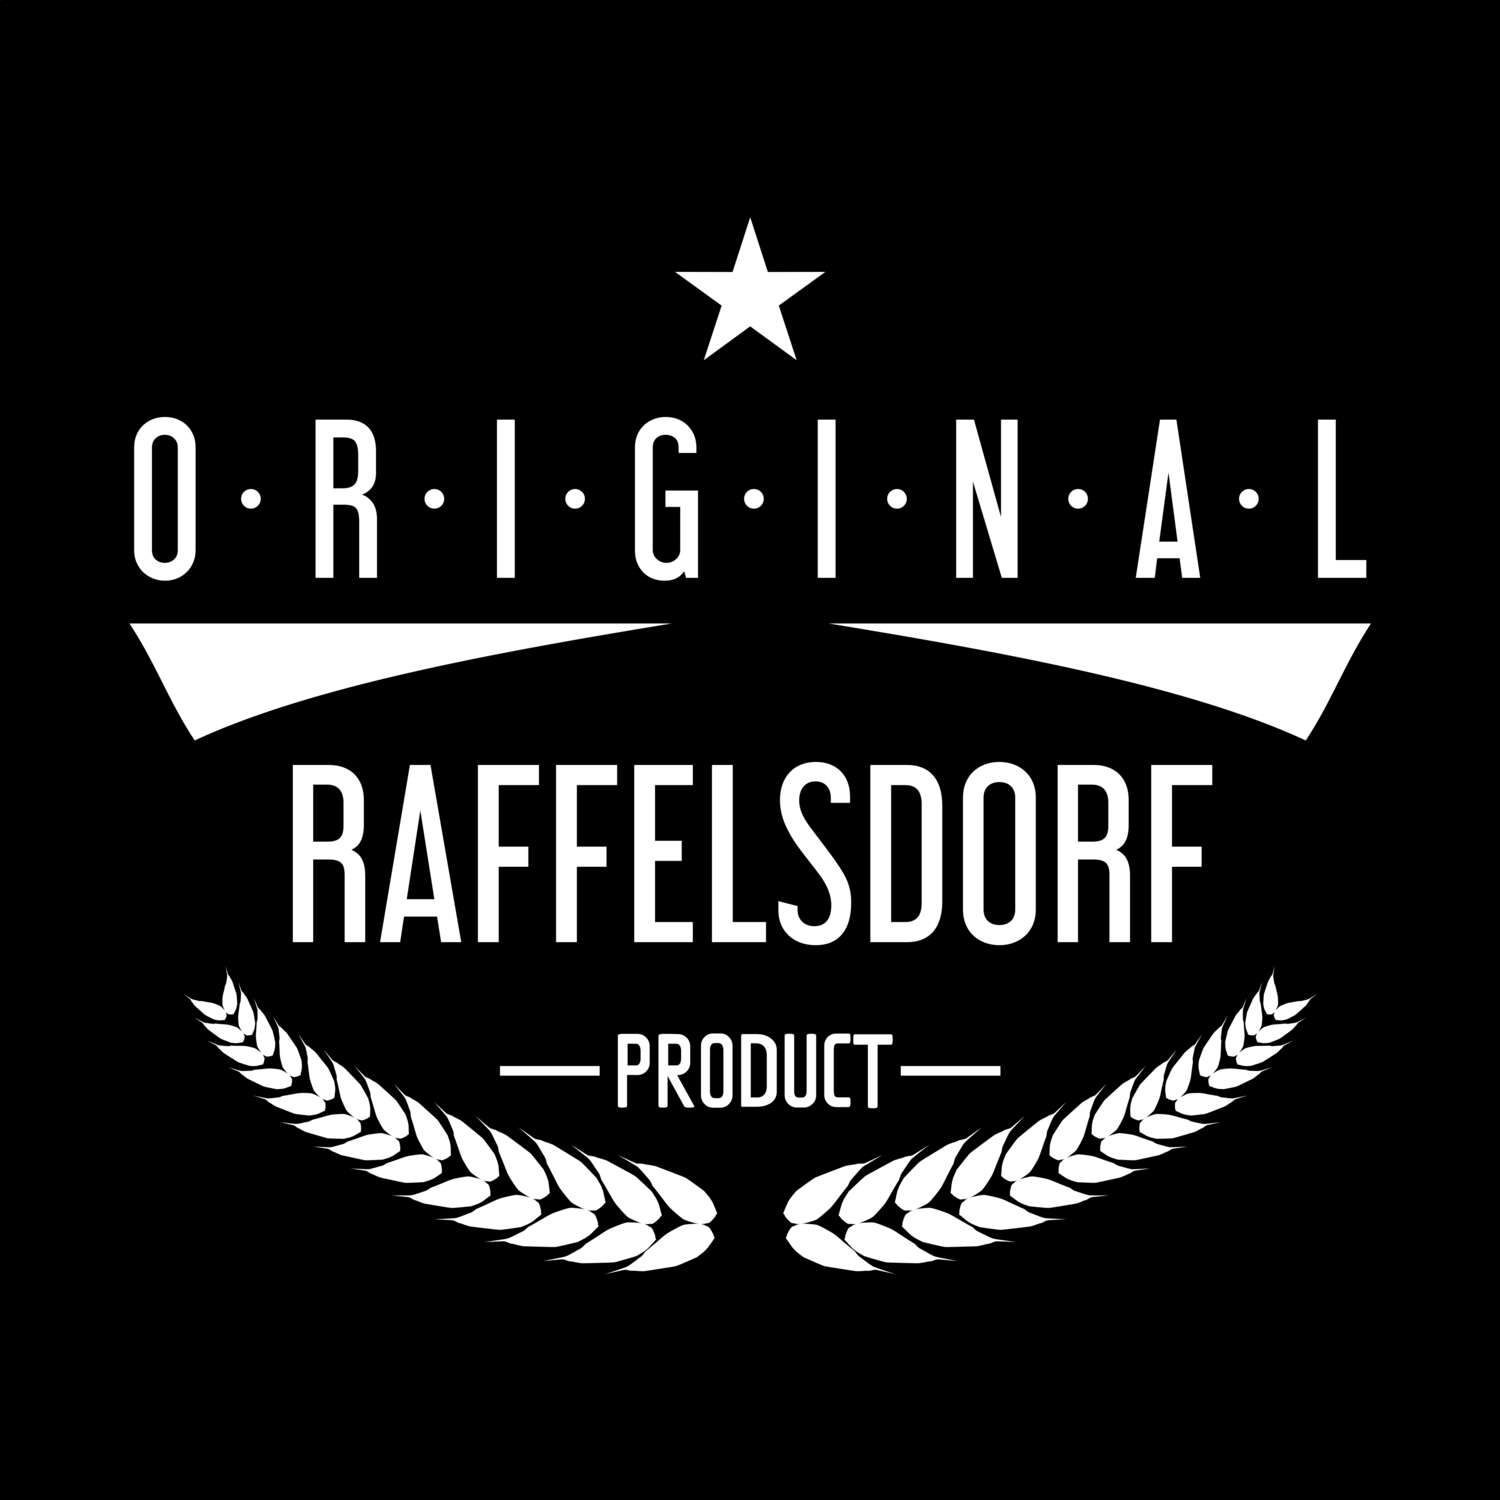 Raffelsdorf T-Shirt »Original Product«